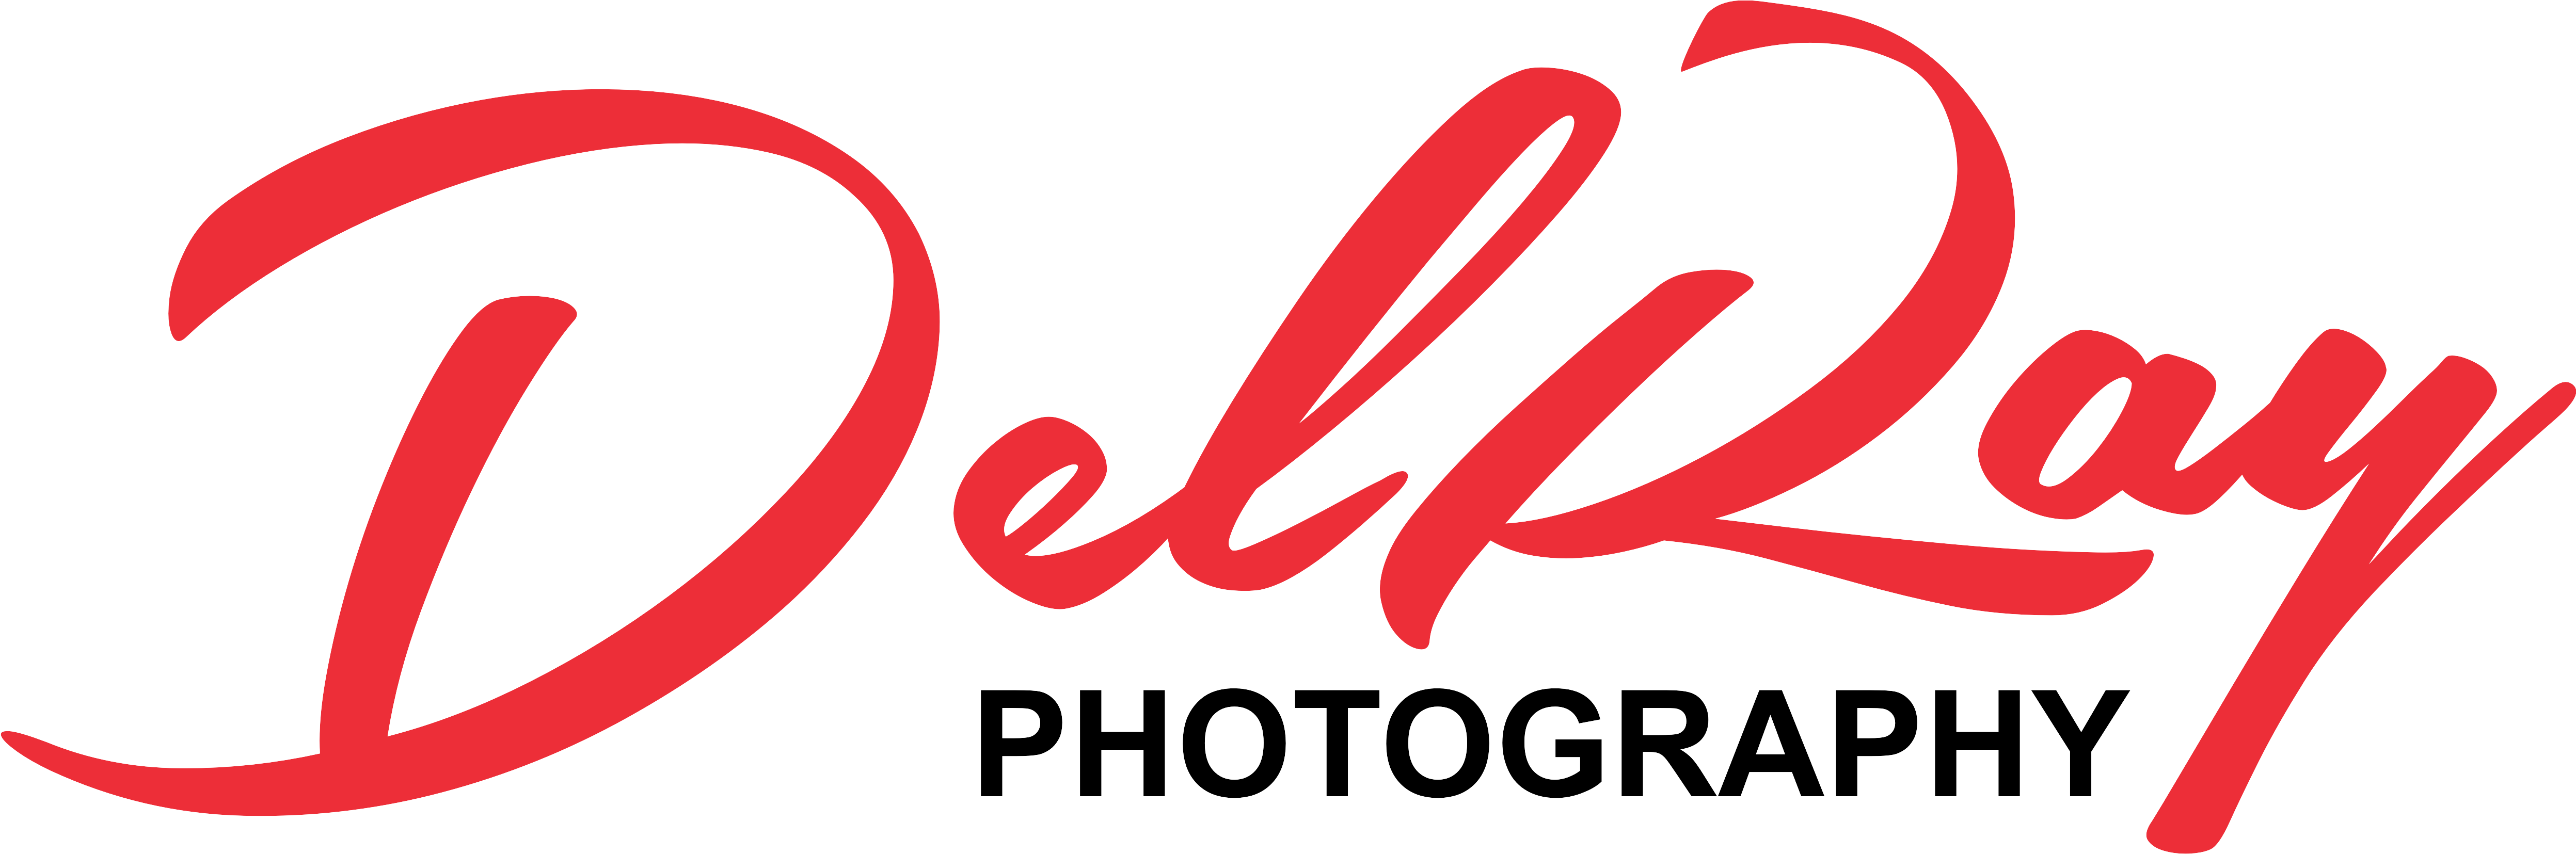 Delray Photography - Photograph (5000x1654)